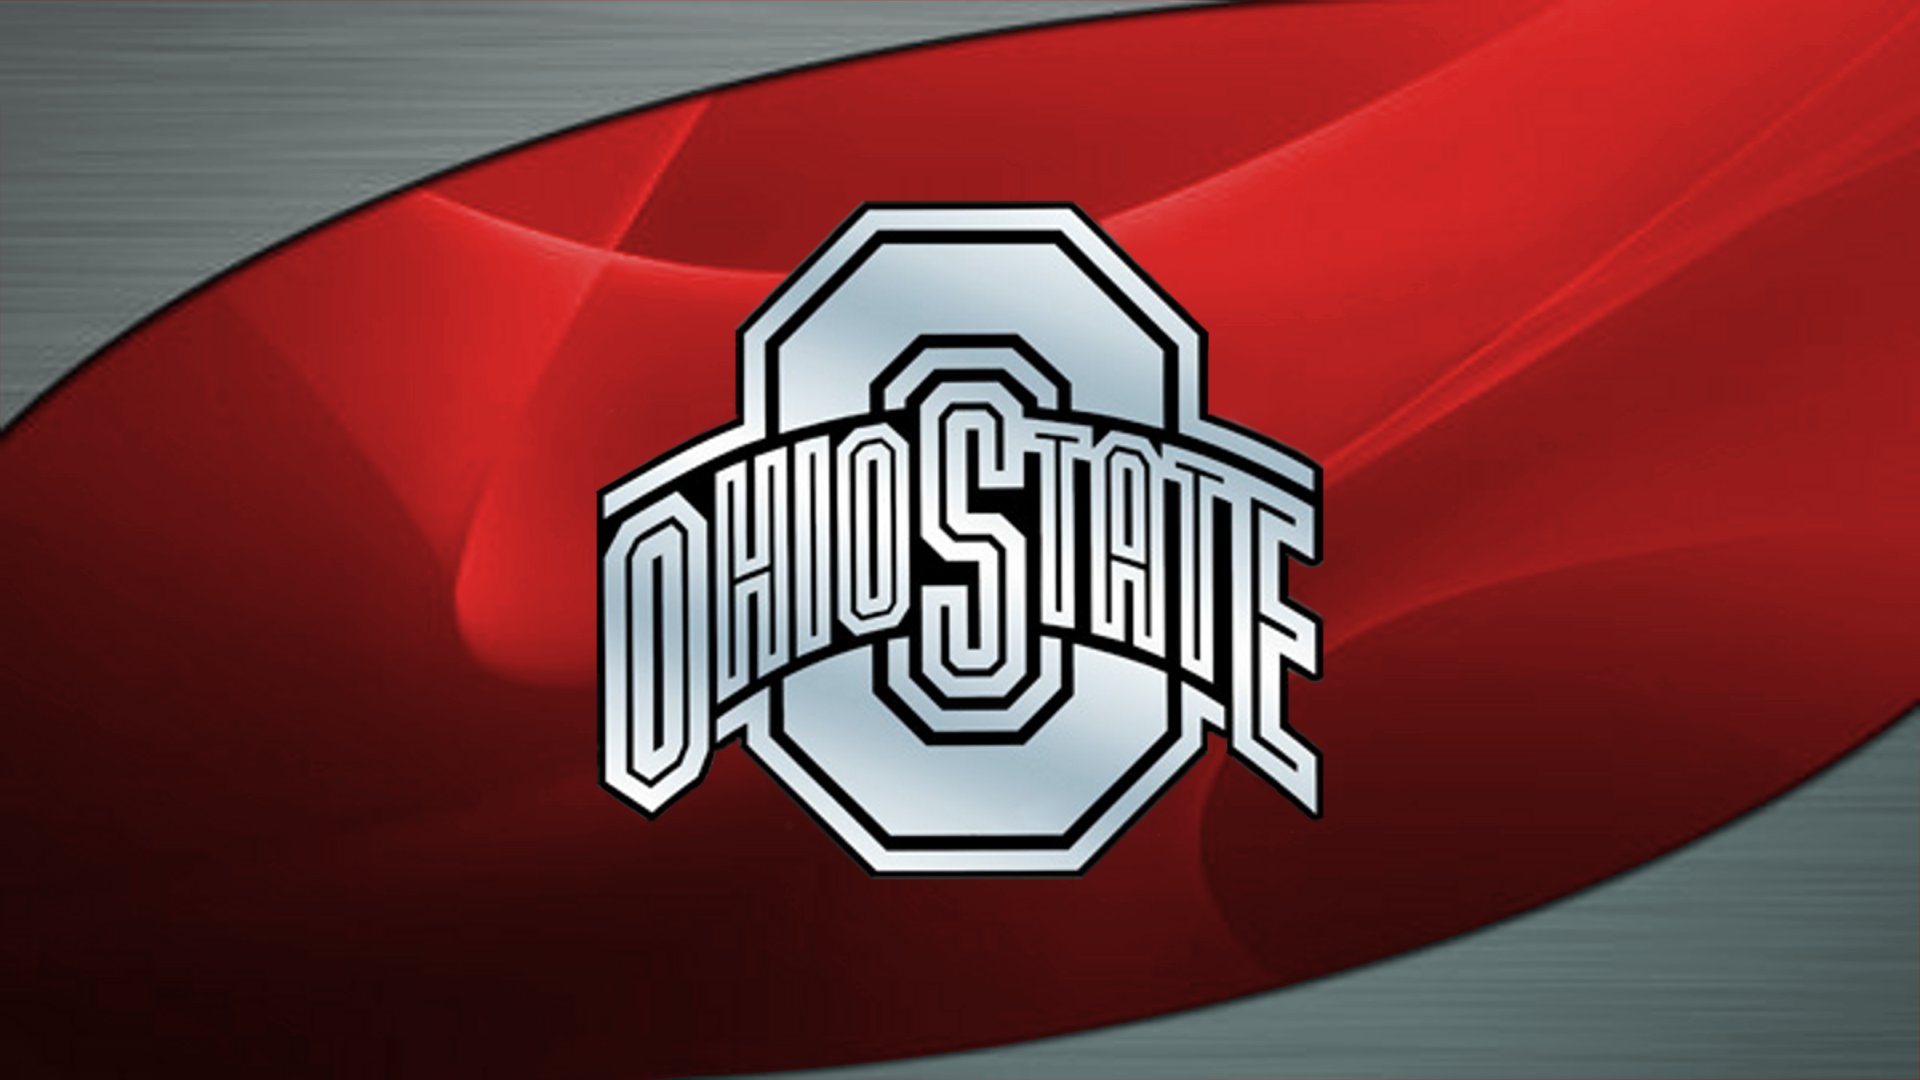 Osu Wallpaper Ohio State Football